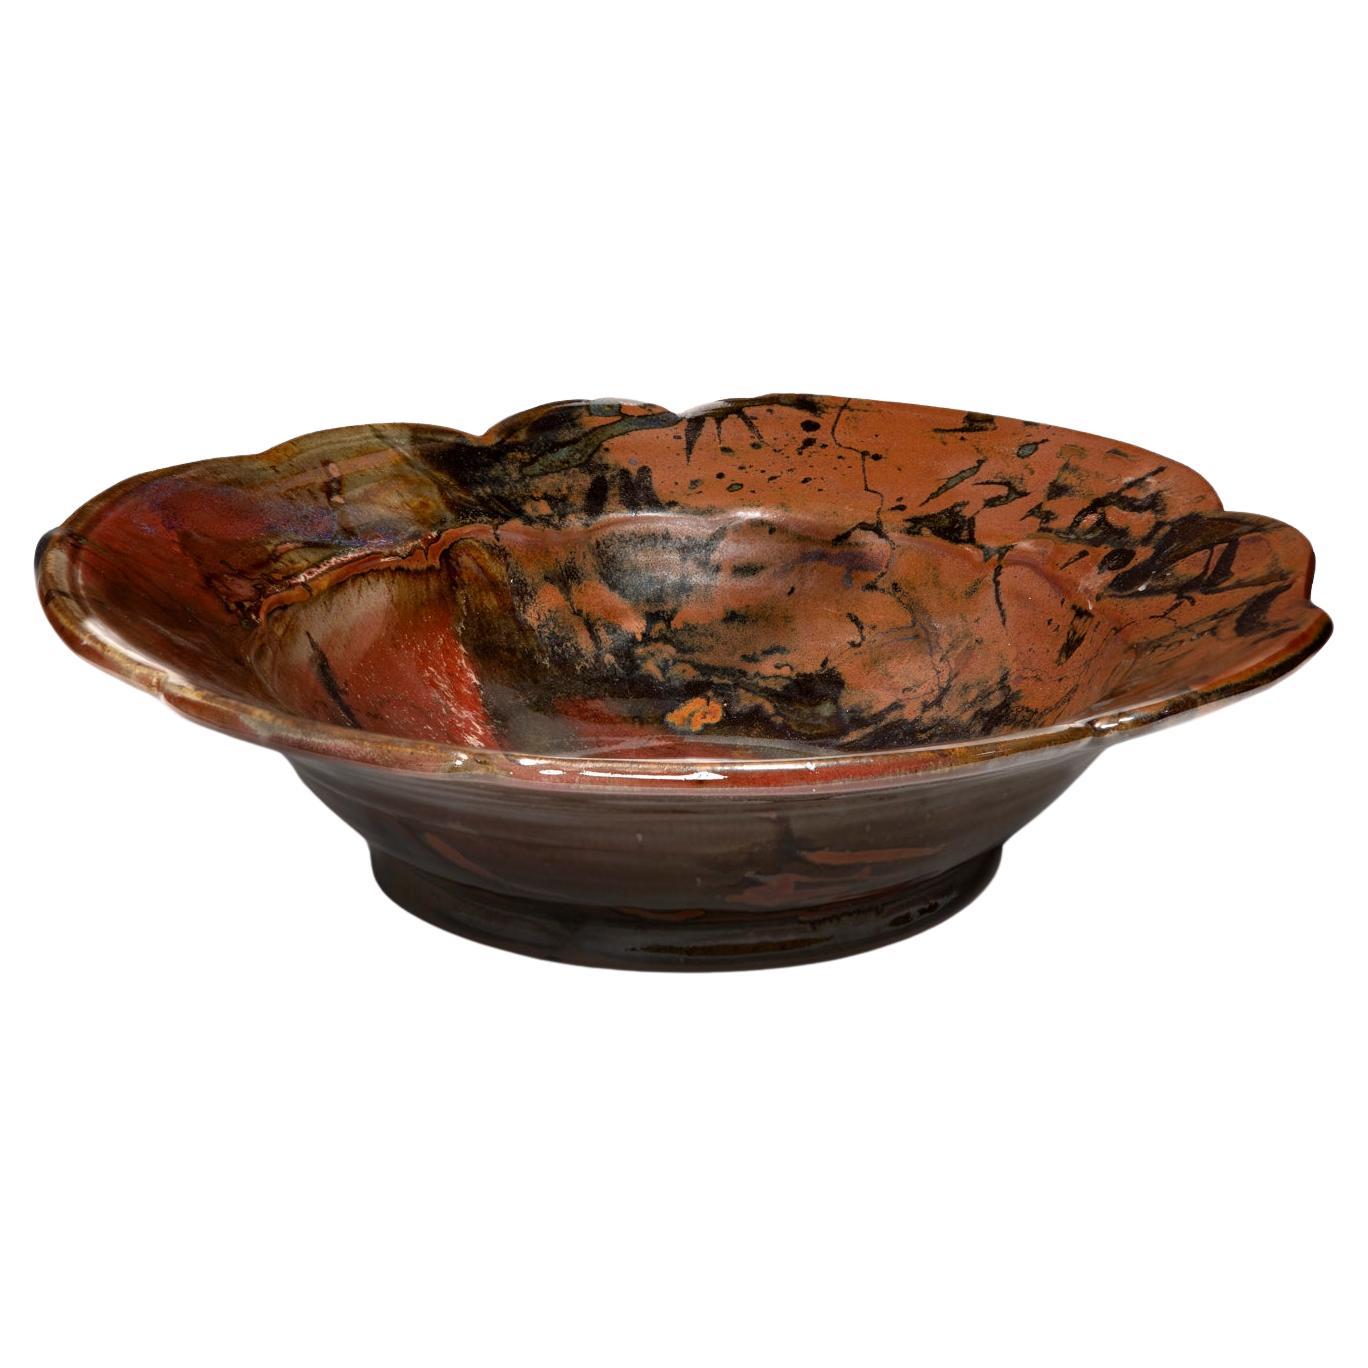 John Glick Plum Street Pottery Ceramic Glazed Bowl/Charger Extra-large  For Sale